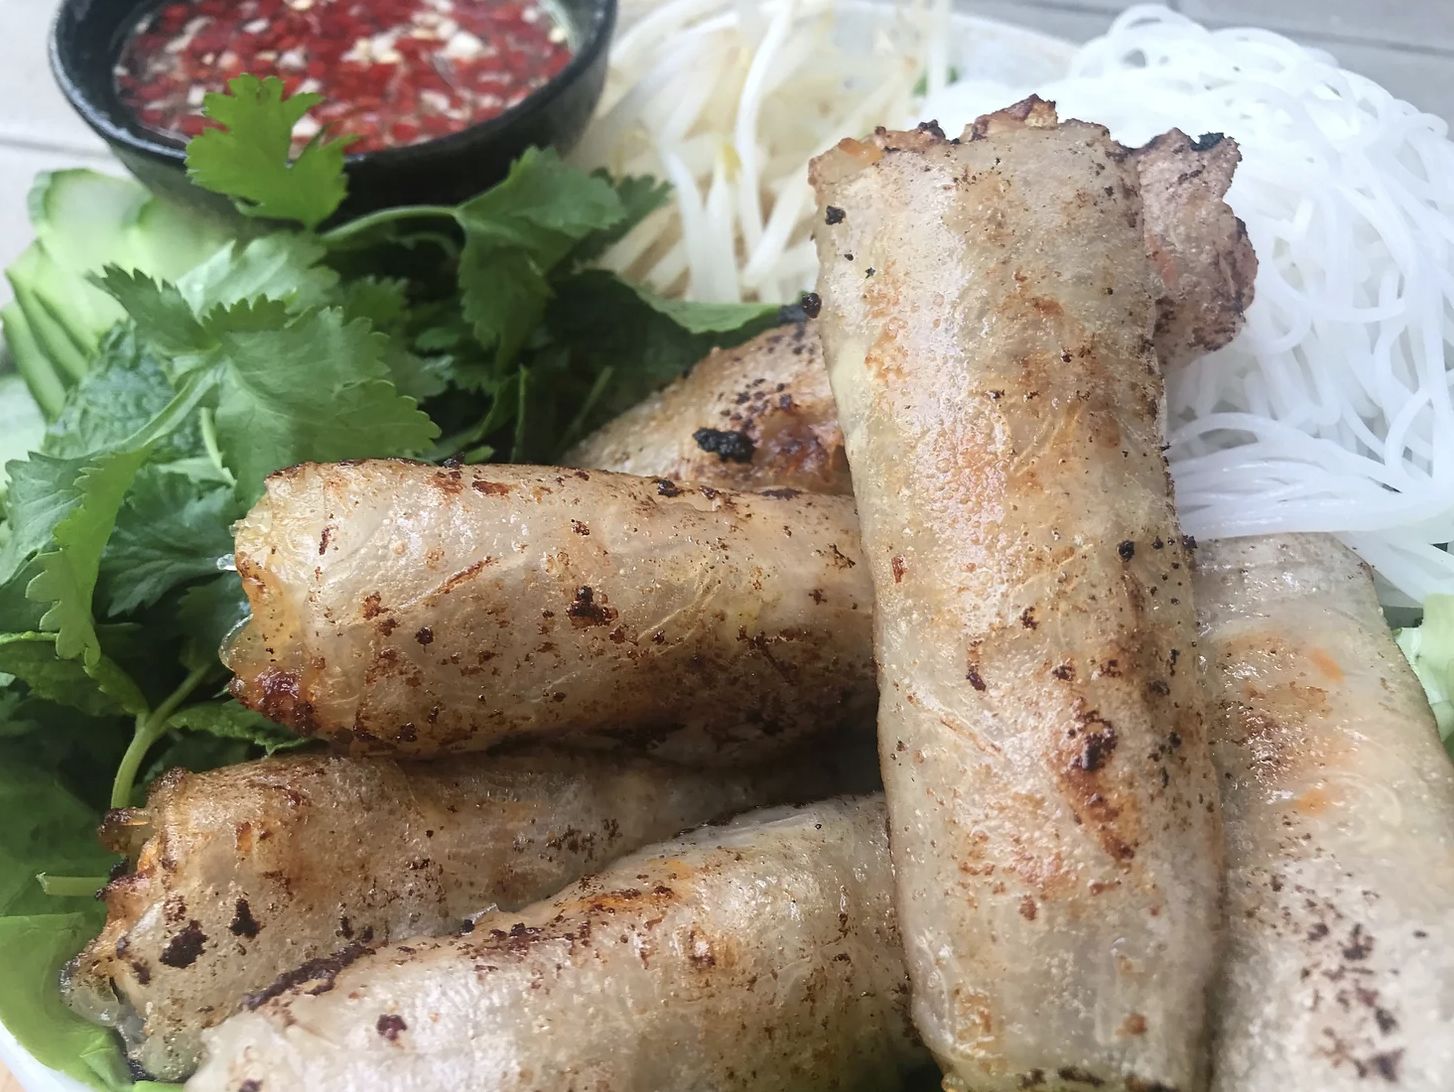 Bun Cha Gio Nuoc Cham (Vietnamese spring roll salad)